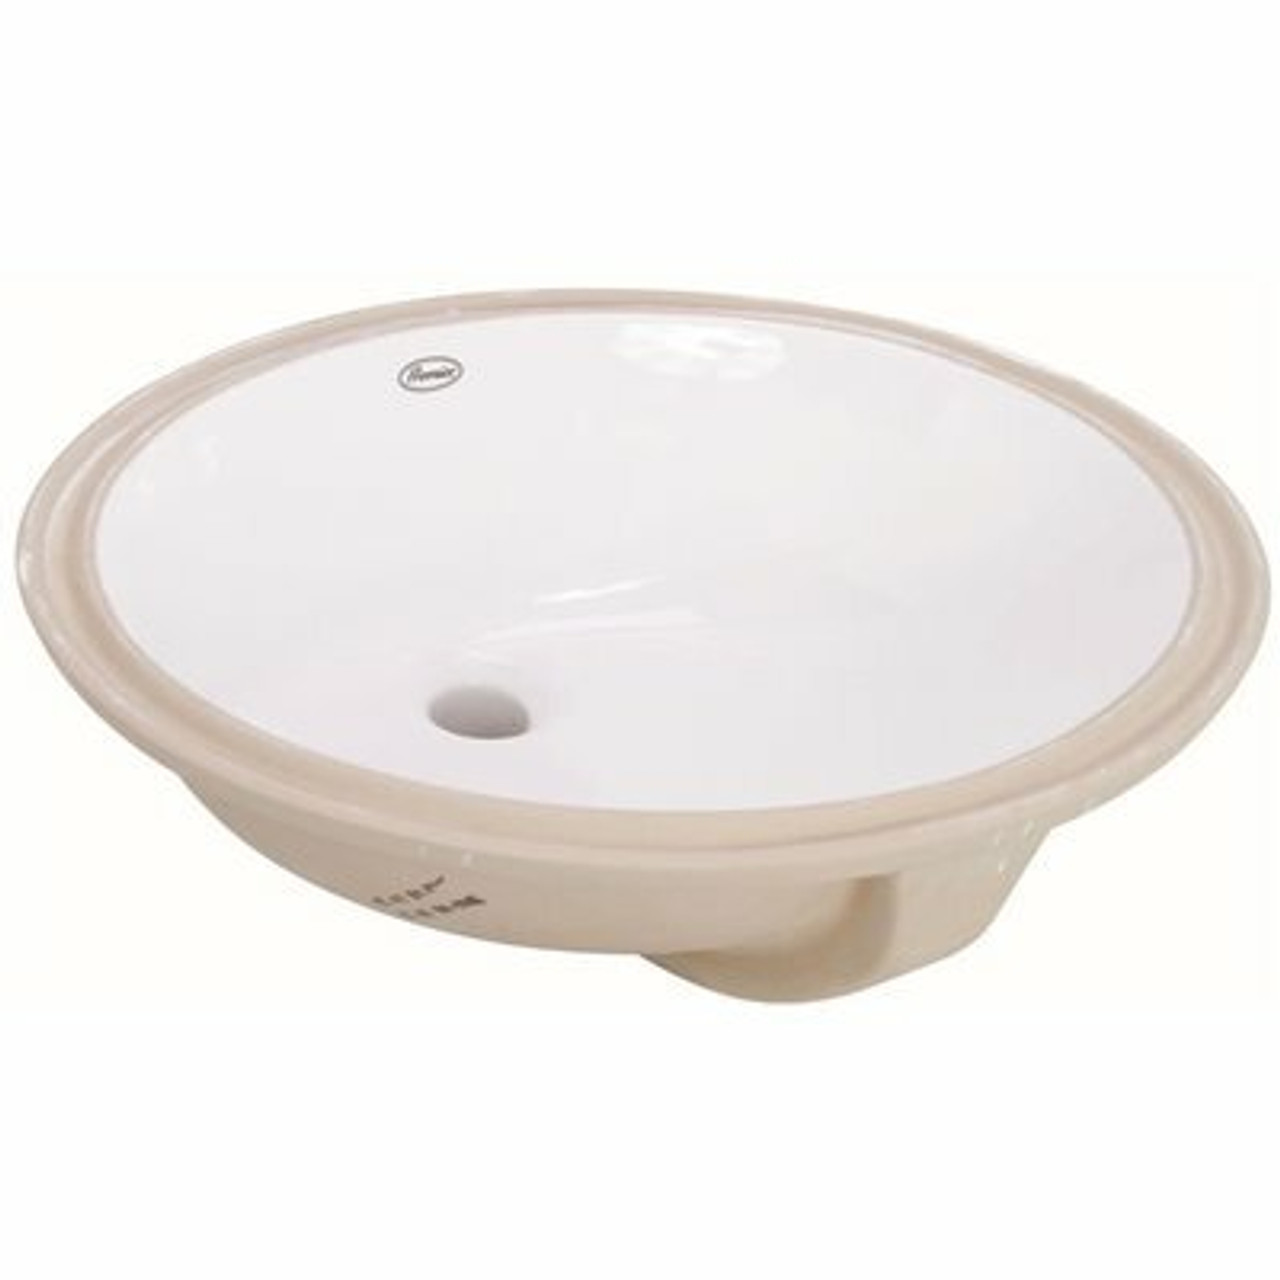 Premier Select 19-3/4 In. Undermount Bathroom Sink In White